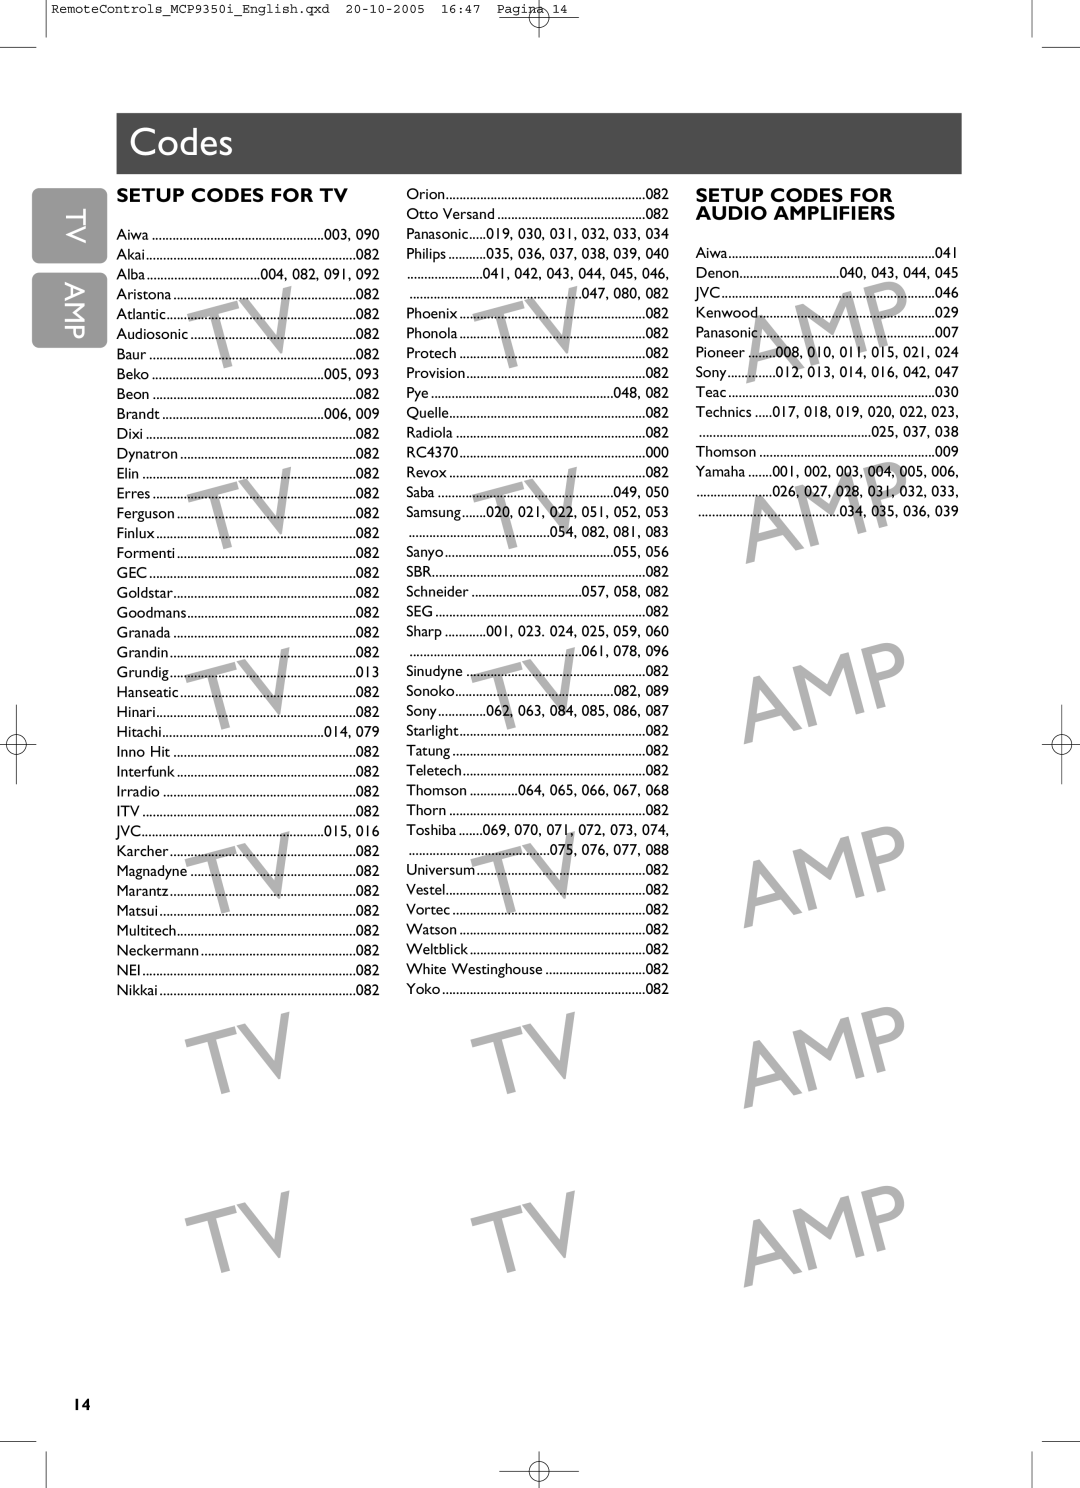 Philips RC4370 user manual Amp Amp, Codes, Tv Amp 